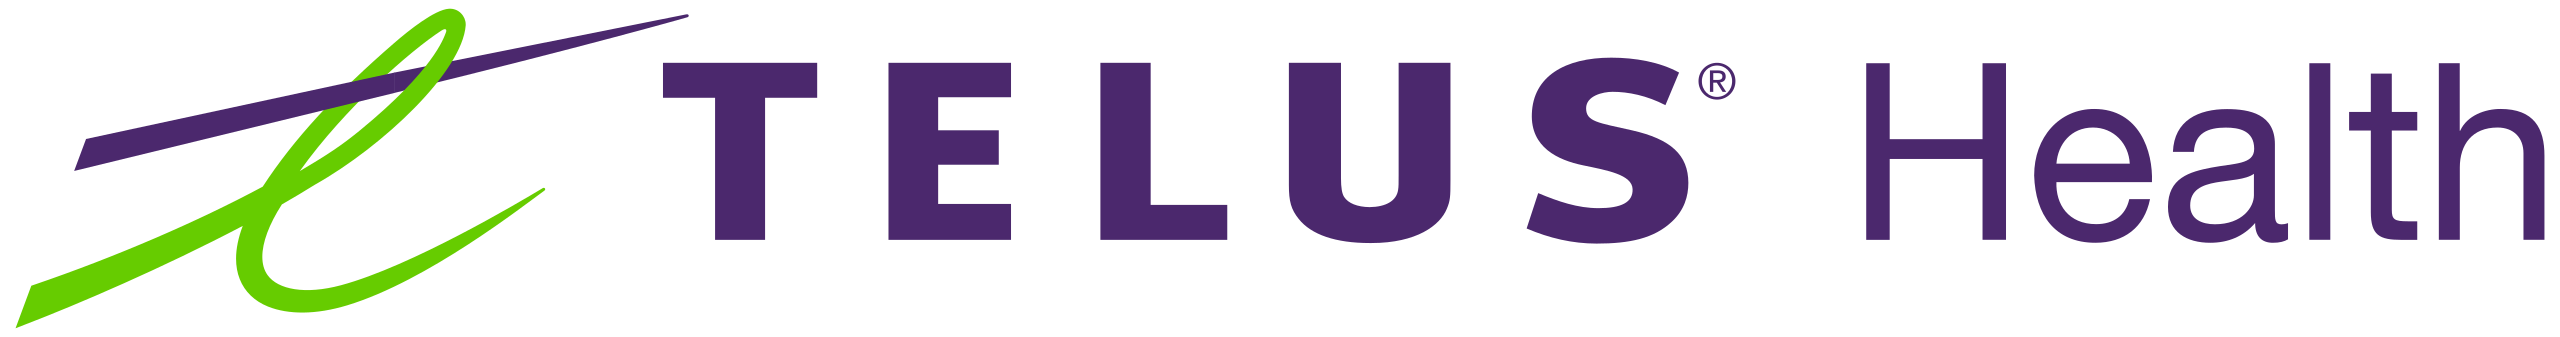 Telus_Health_logo.svg